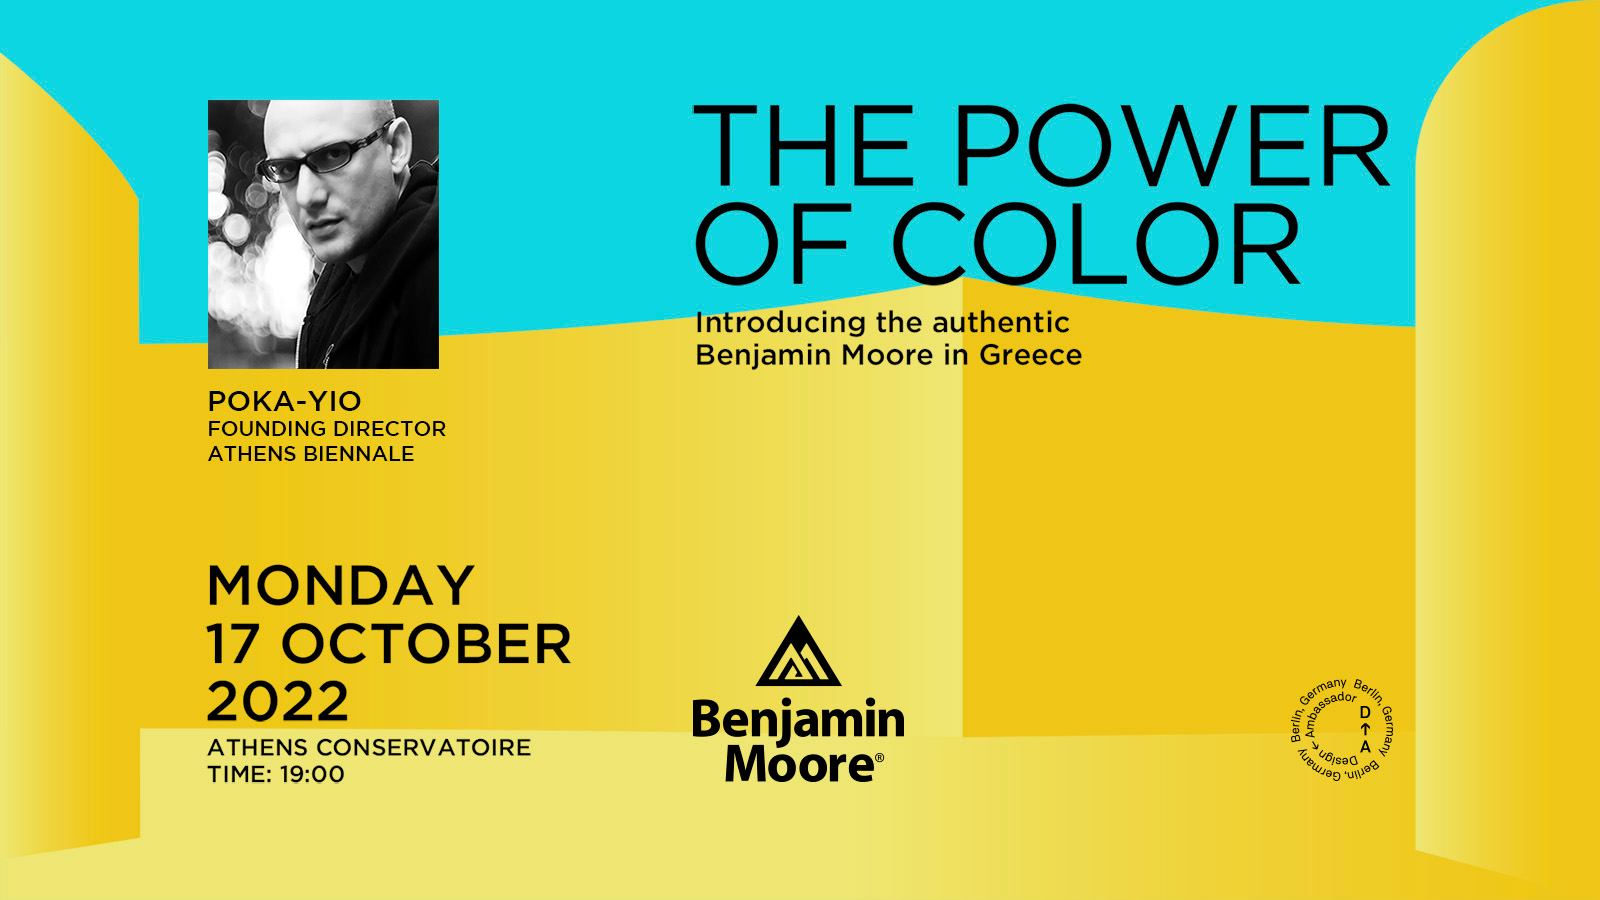 Archisearch THE POWER OF COLOR. - Ένα event από την Design Ambassador για την Benjamin Moore, για τη λειτουργία του χρώματος στην αρχιτεκτονική.